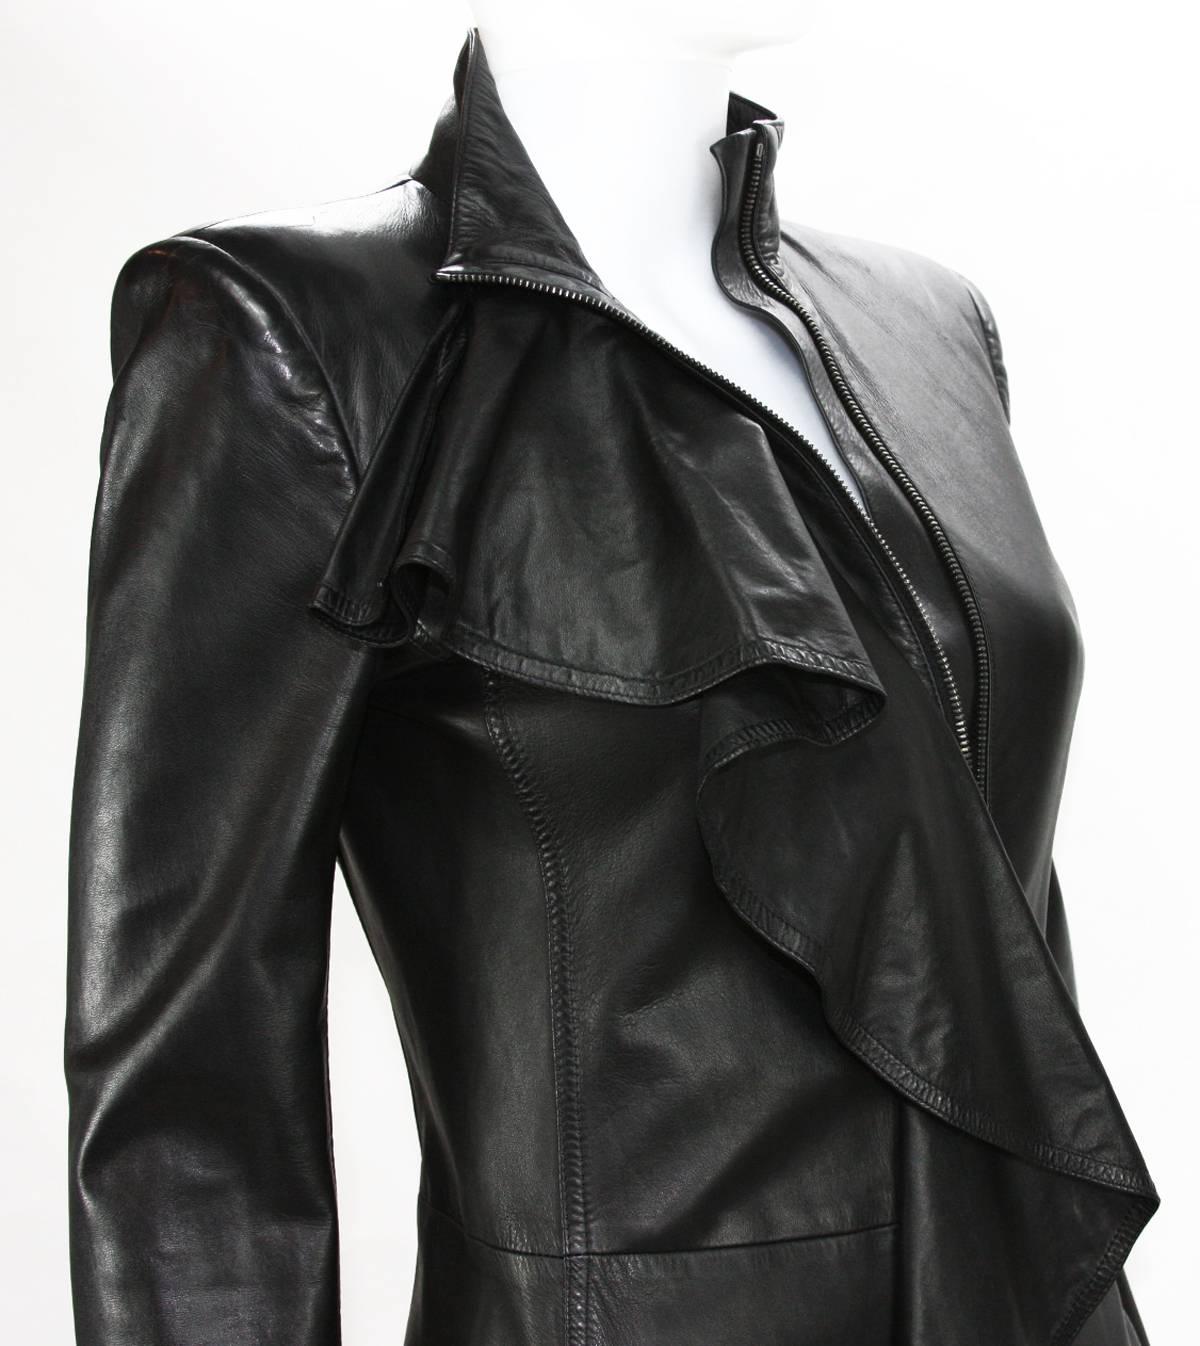 TOM FORD for YVES SAINT LAURENT F/W 2003 Black Leather Ruffle Coat Fr.36 US 4 4